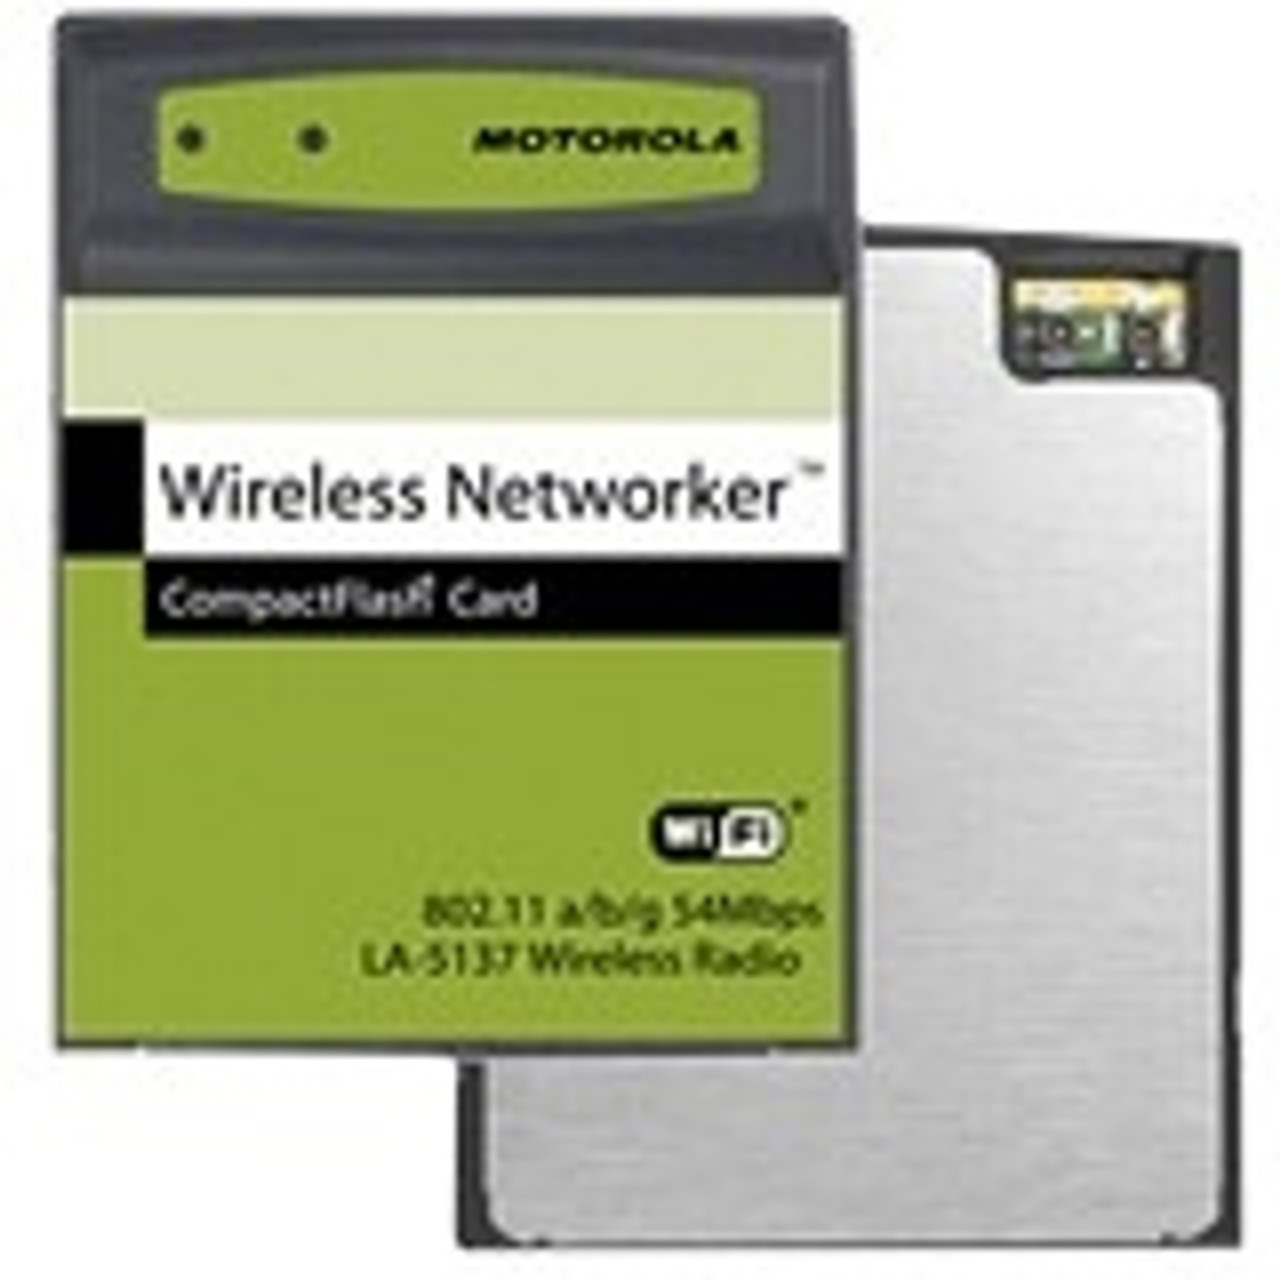 LA-5137-1020-WWR Zebra LA-5137 IEEE 802.11a/b/g Wi-Fi Network Adapter